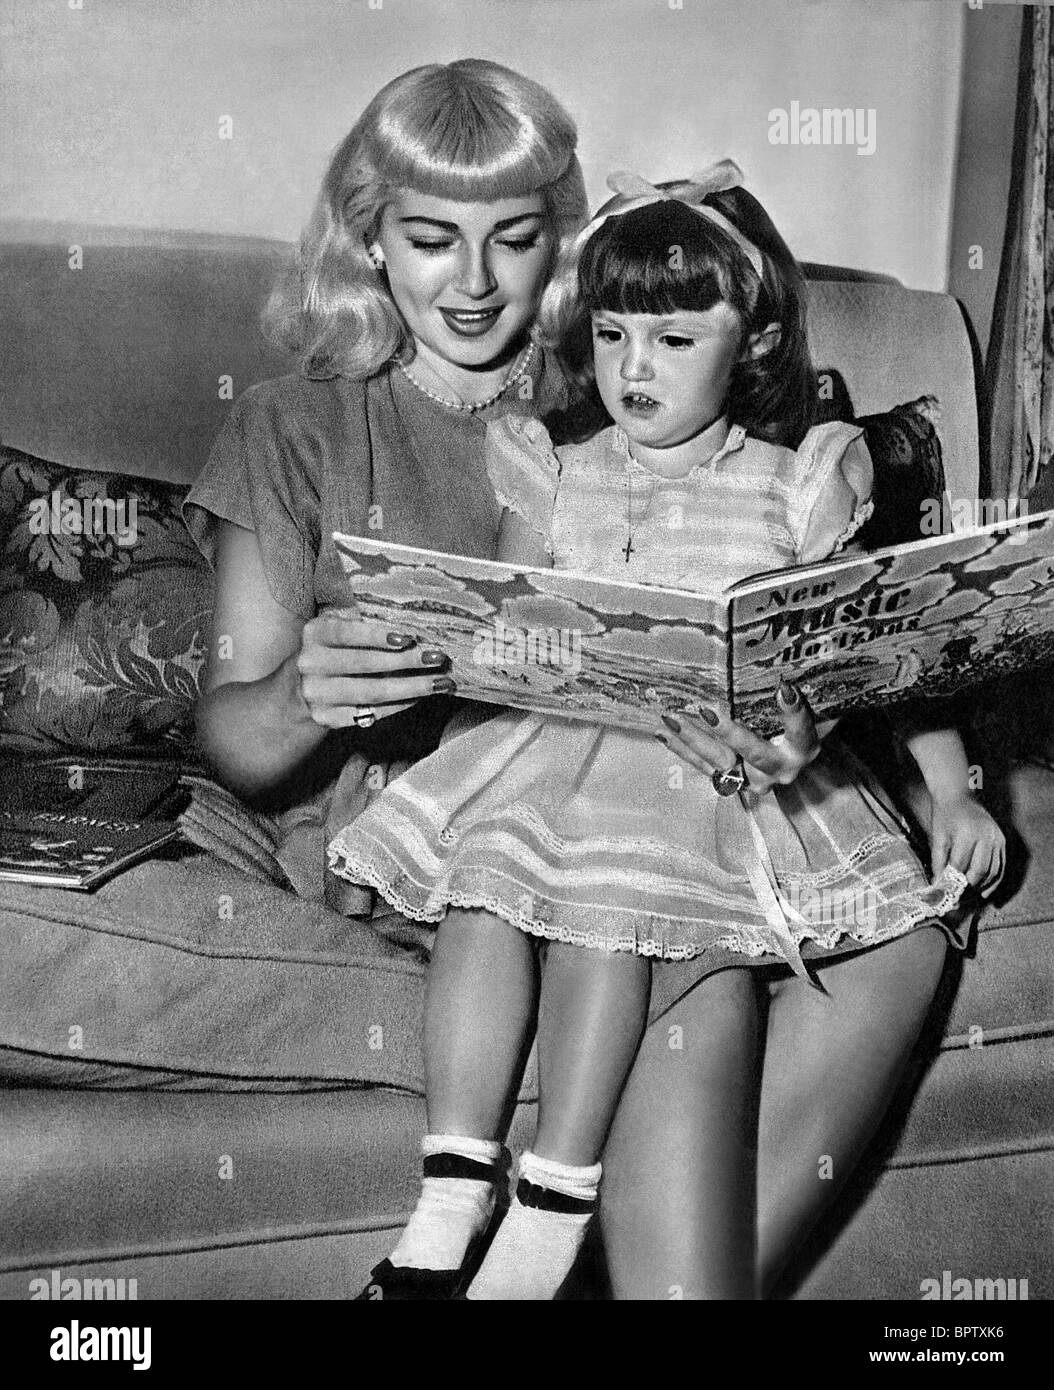 LANA TURNER WITH DAUGHTER CHERYL CRANE ACTRESS WITH DAUGHTER (1947) Stock Photo